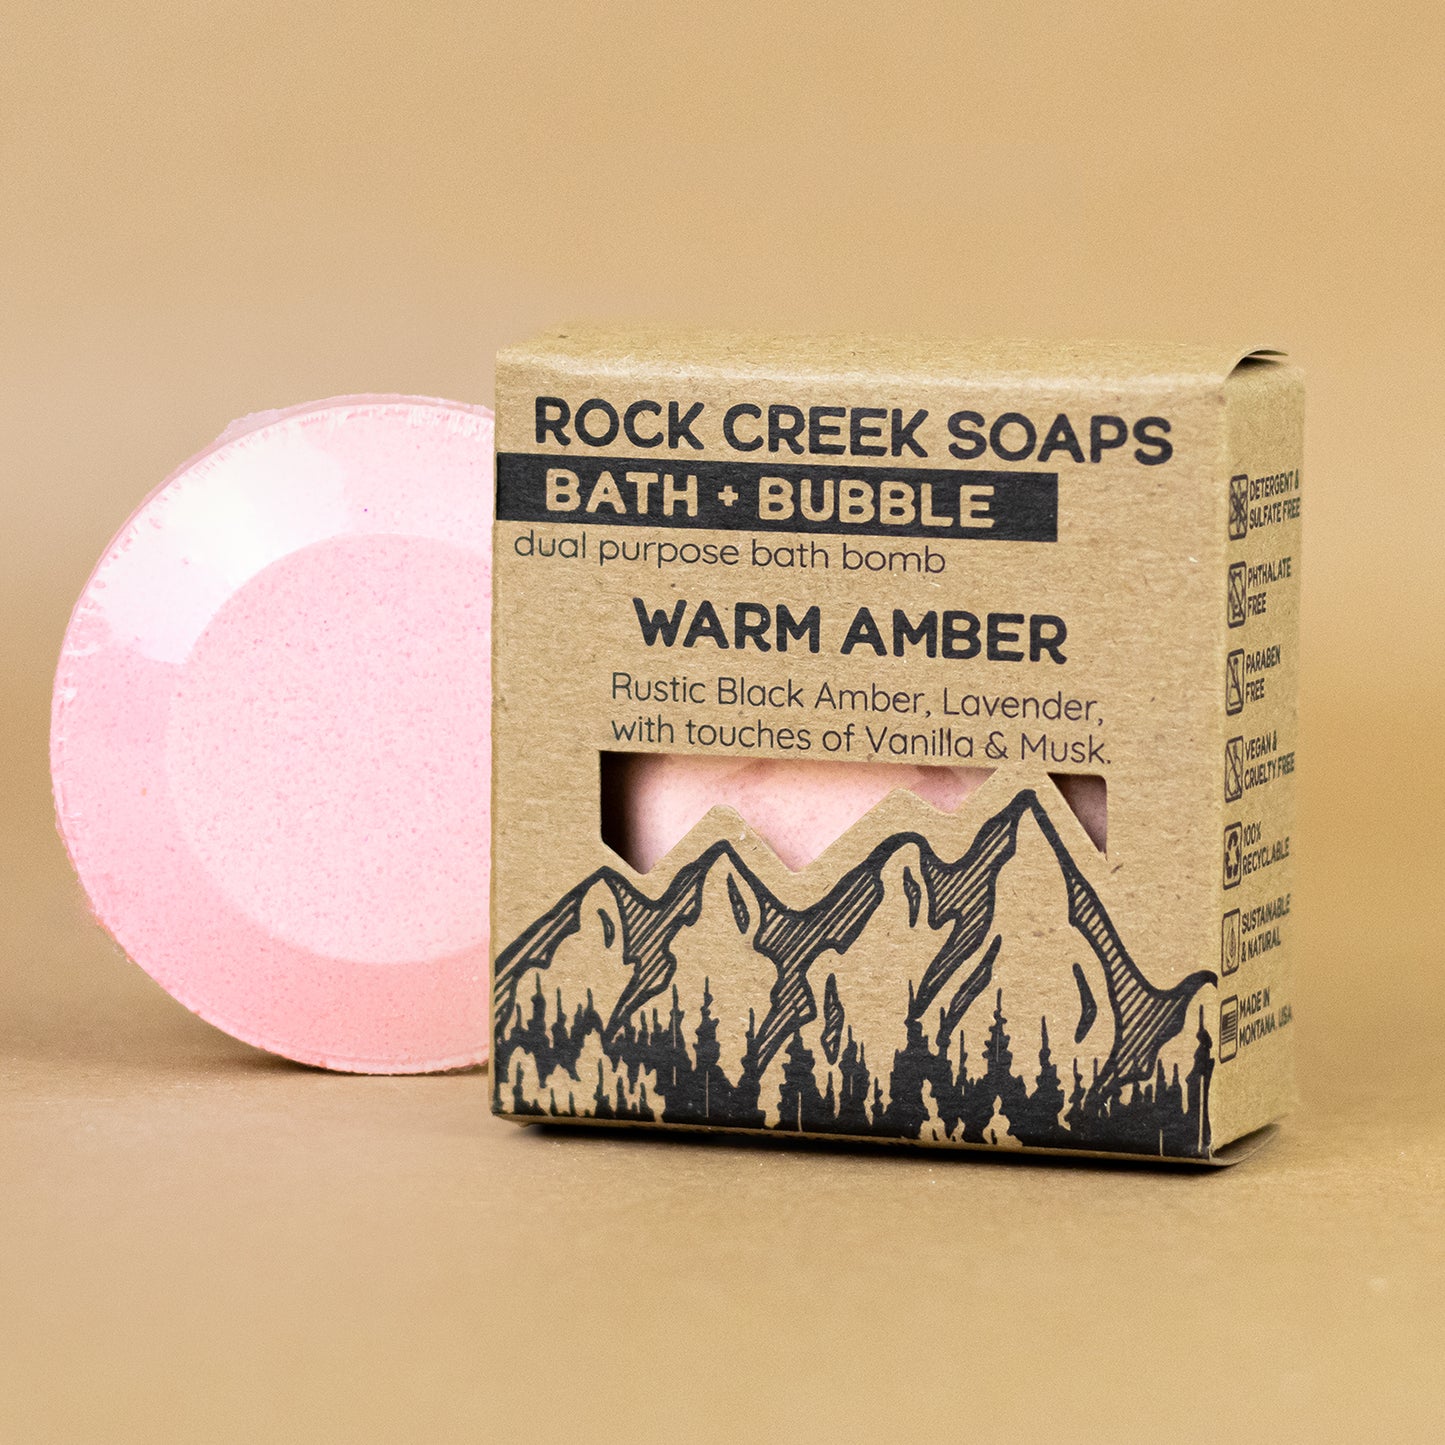 Bath Bomb - Boxed